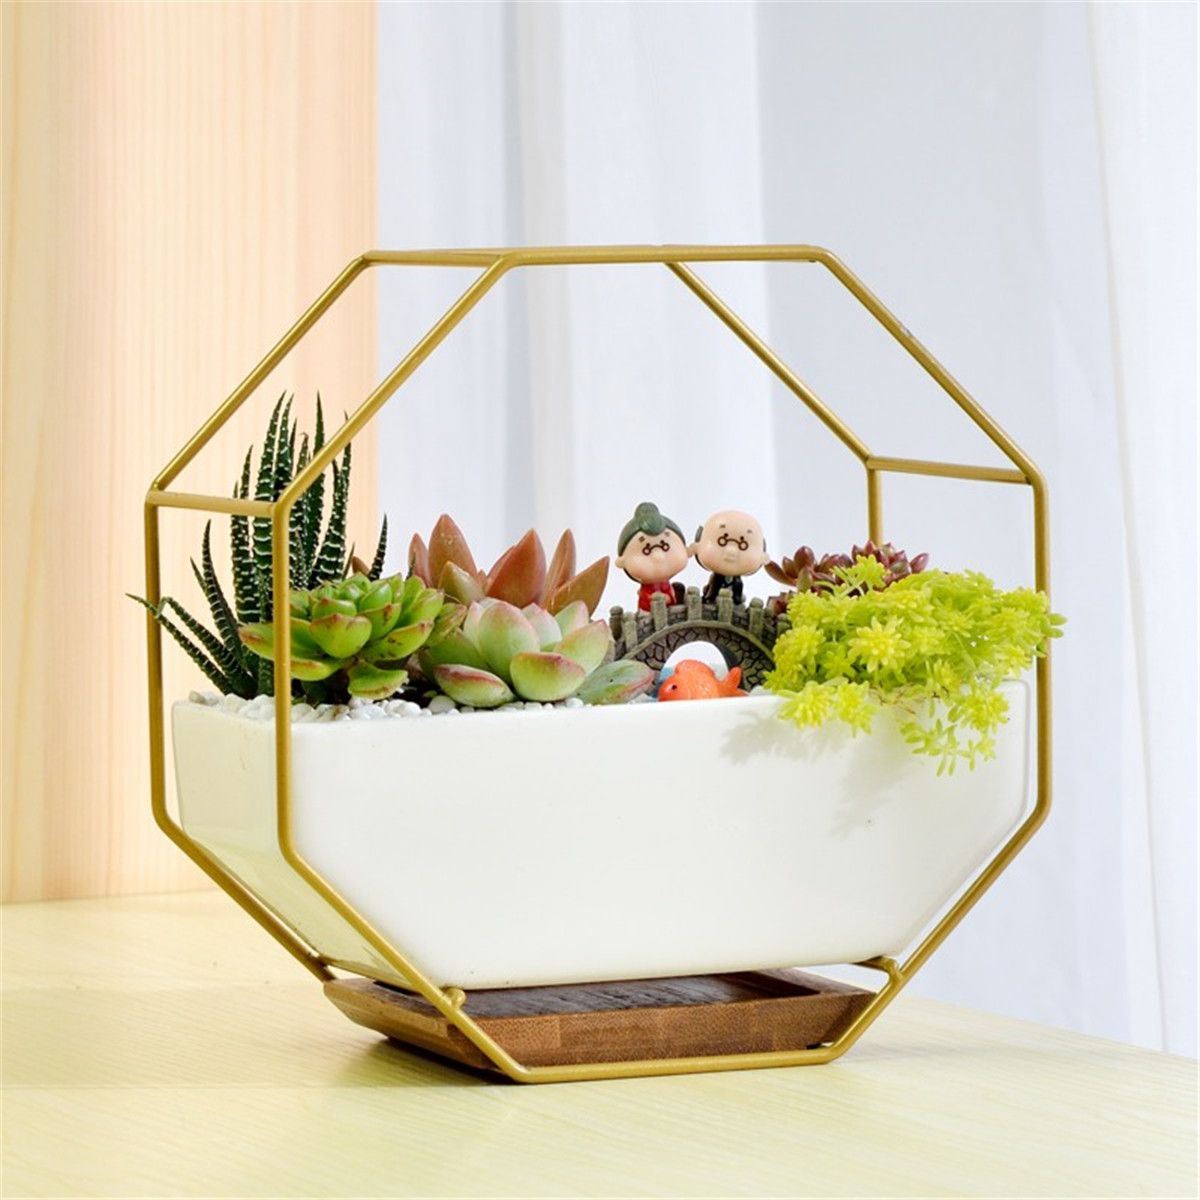 Wrought-Iron-Simple-Octagonal-Ceramic-Flower-Pot-Creative-Wall-Hanging-Succulent-Flower-Pot-Set-1726559